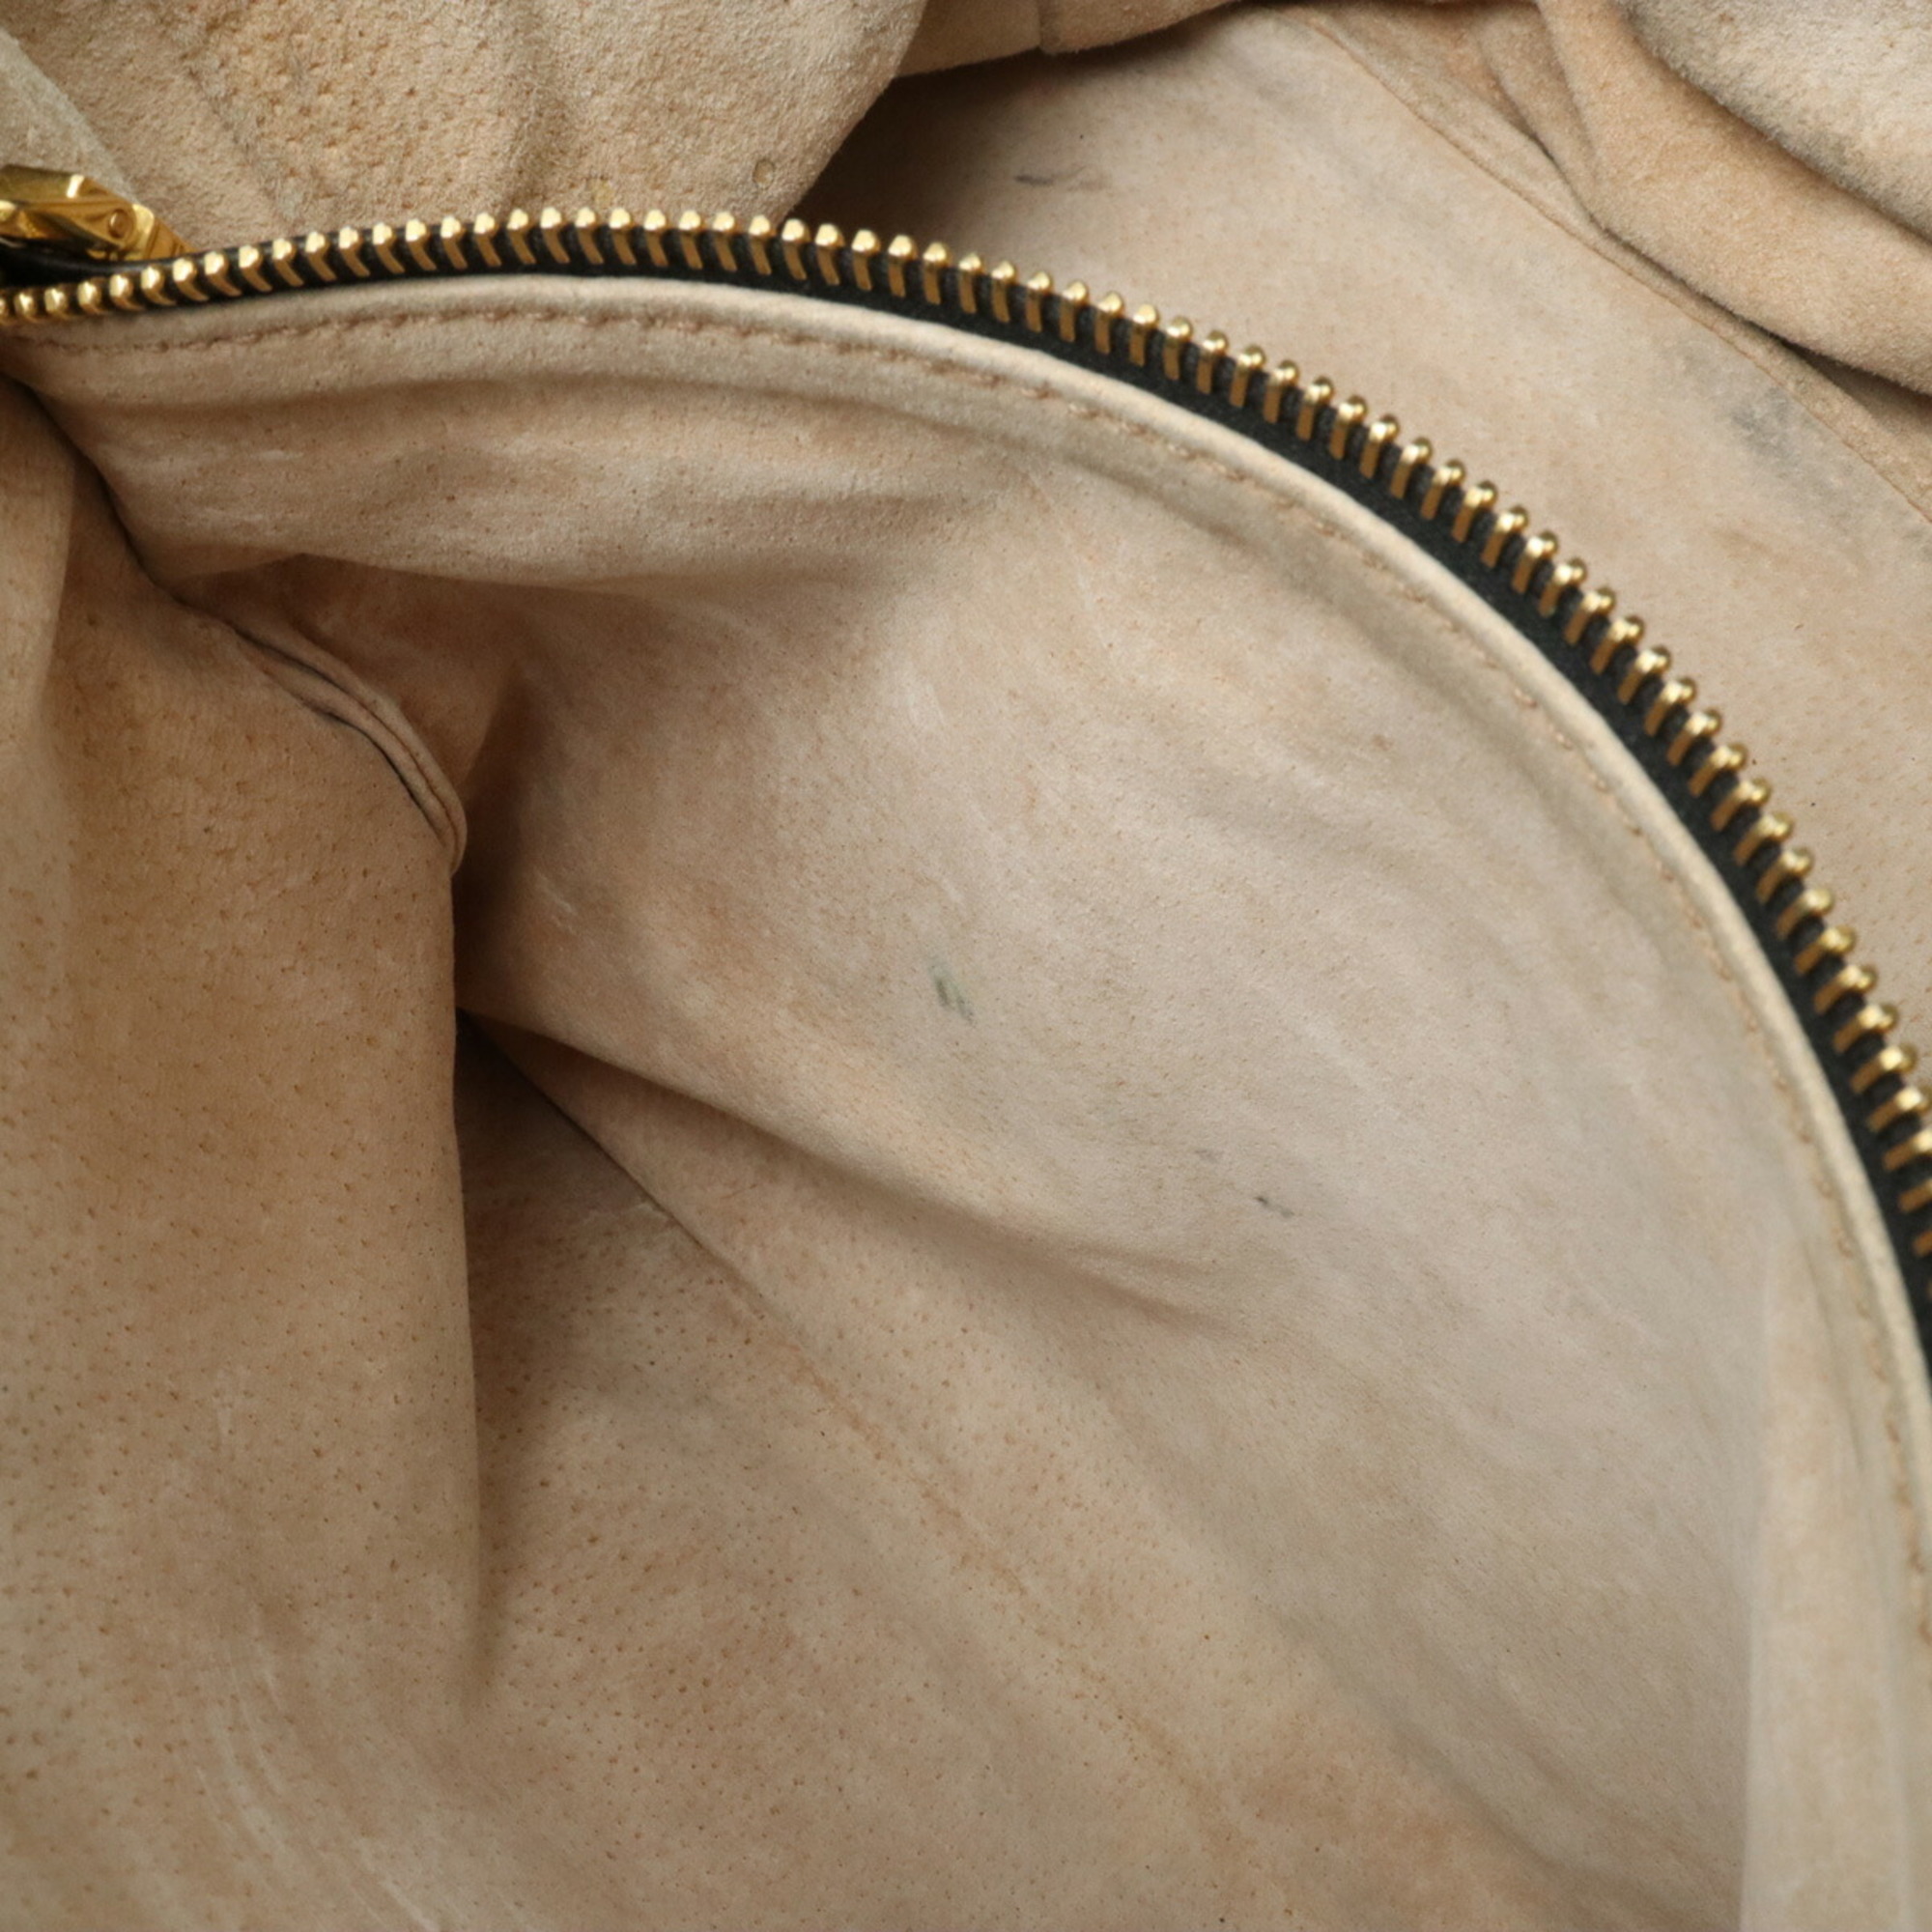 PRADA Prada Tote Bag Handbag Shoulder Leather NERO Black BN2081